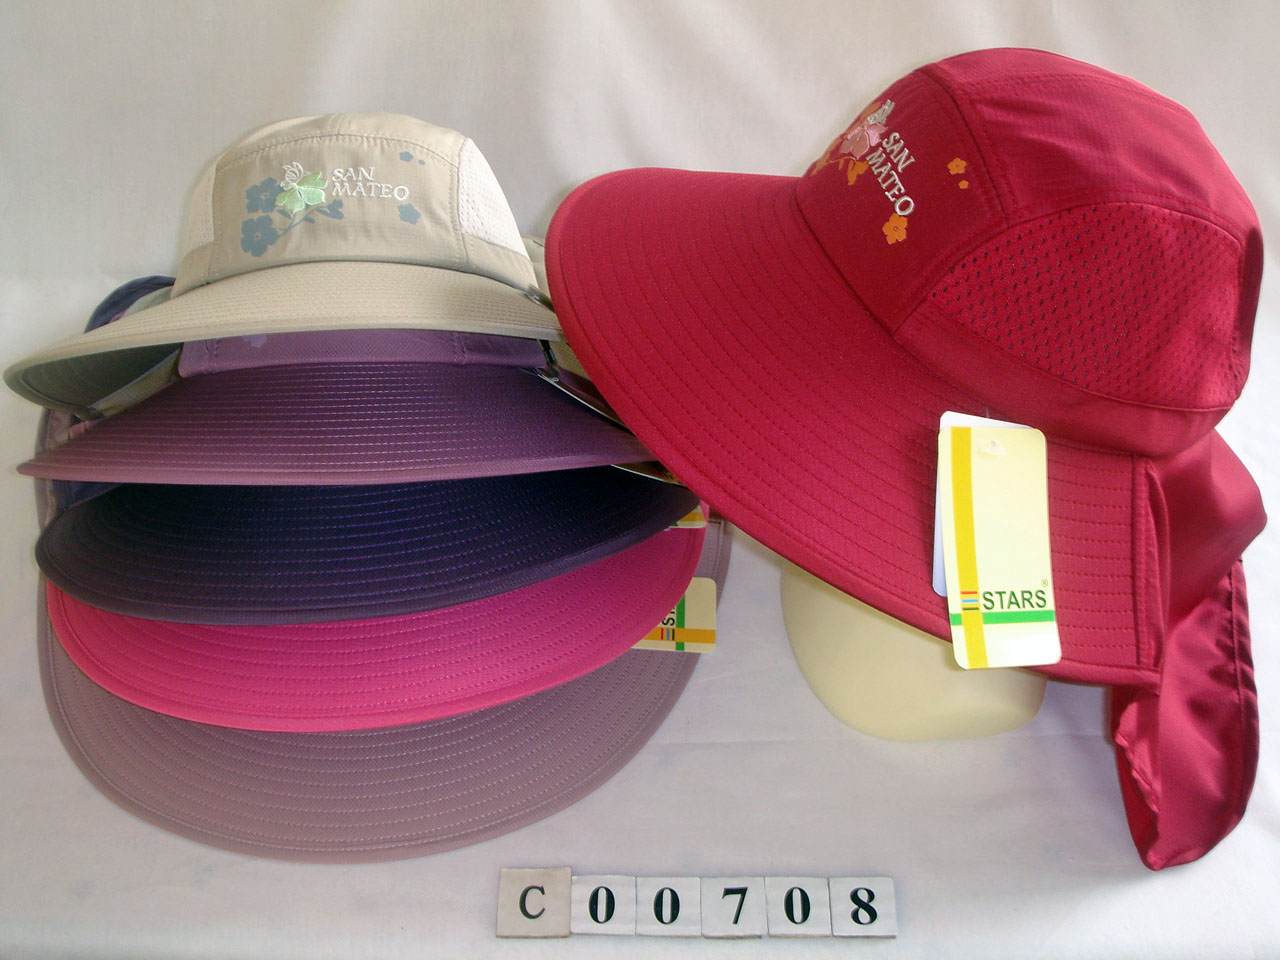 CO0708 固定式後披 無前披 格子布五片式休閒帽子 電繡花與SAN MATEO 三星製帽